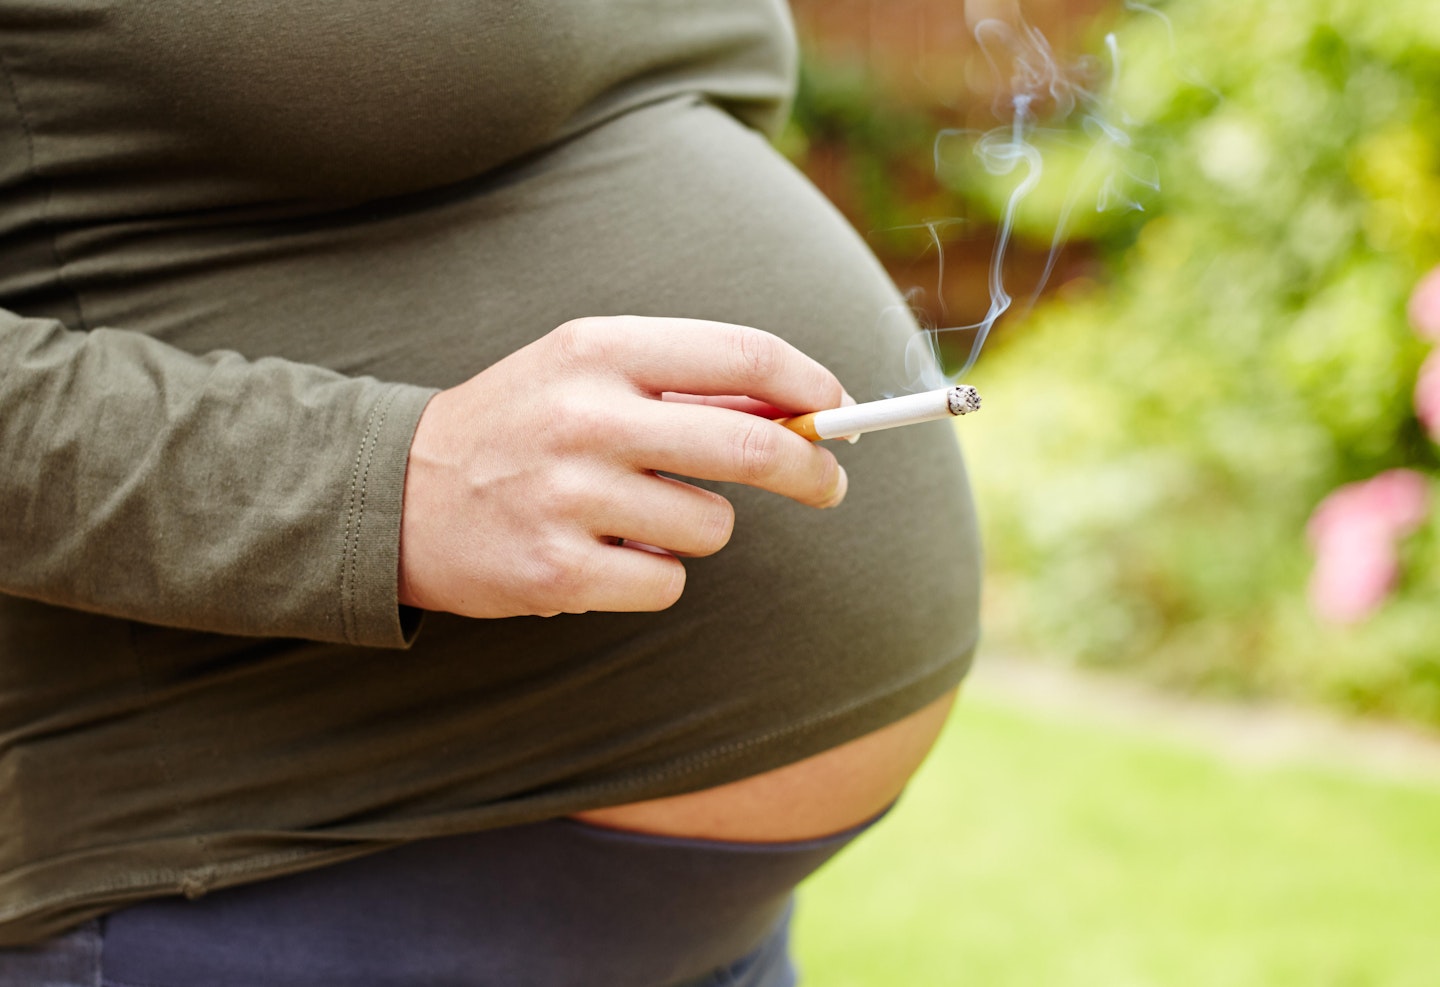 smoking whilst pregnant